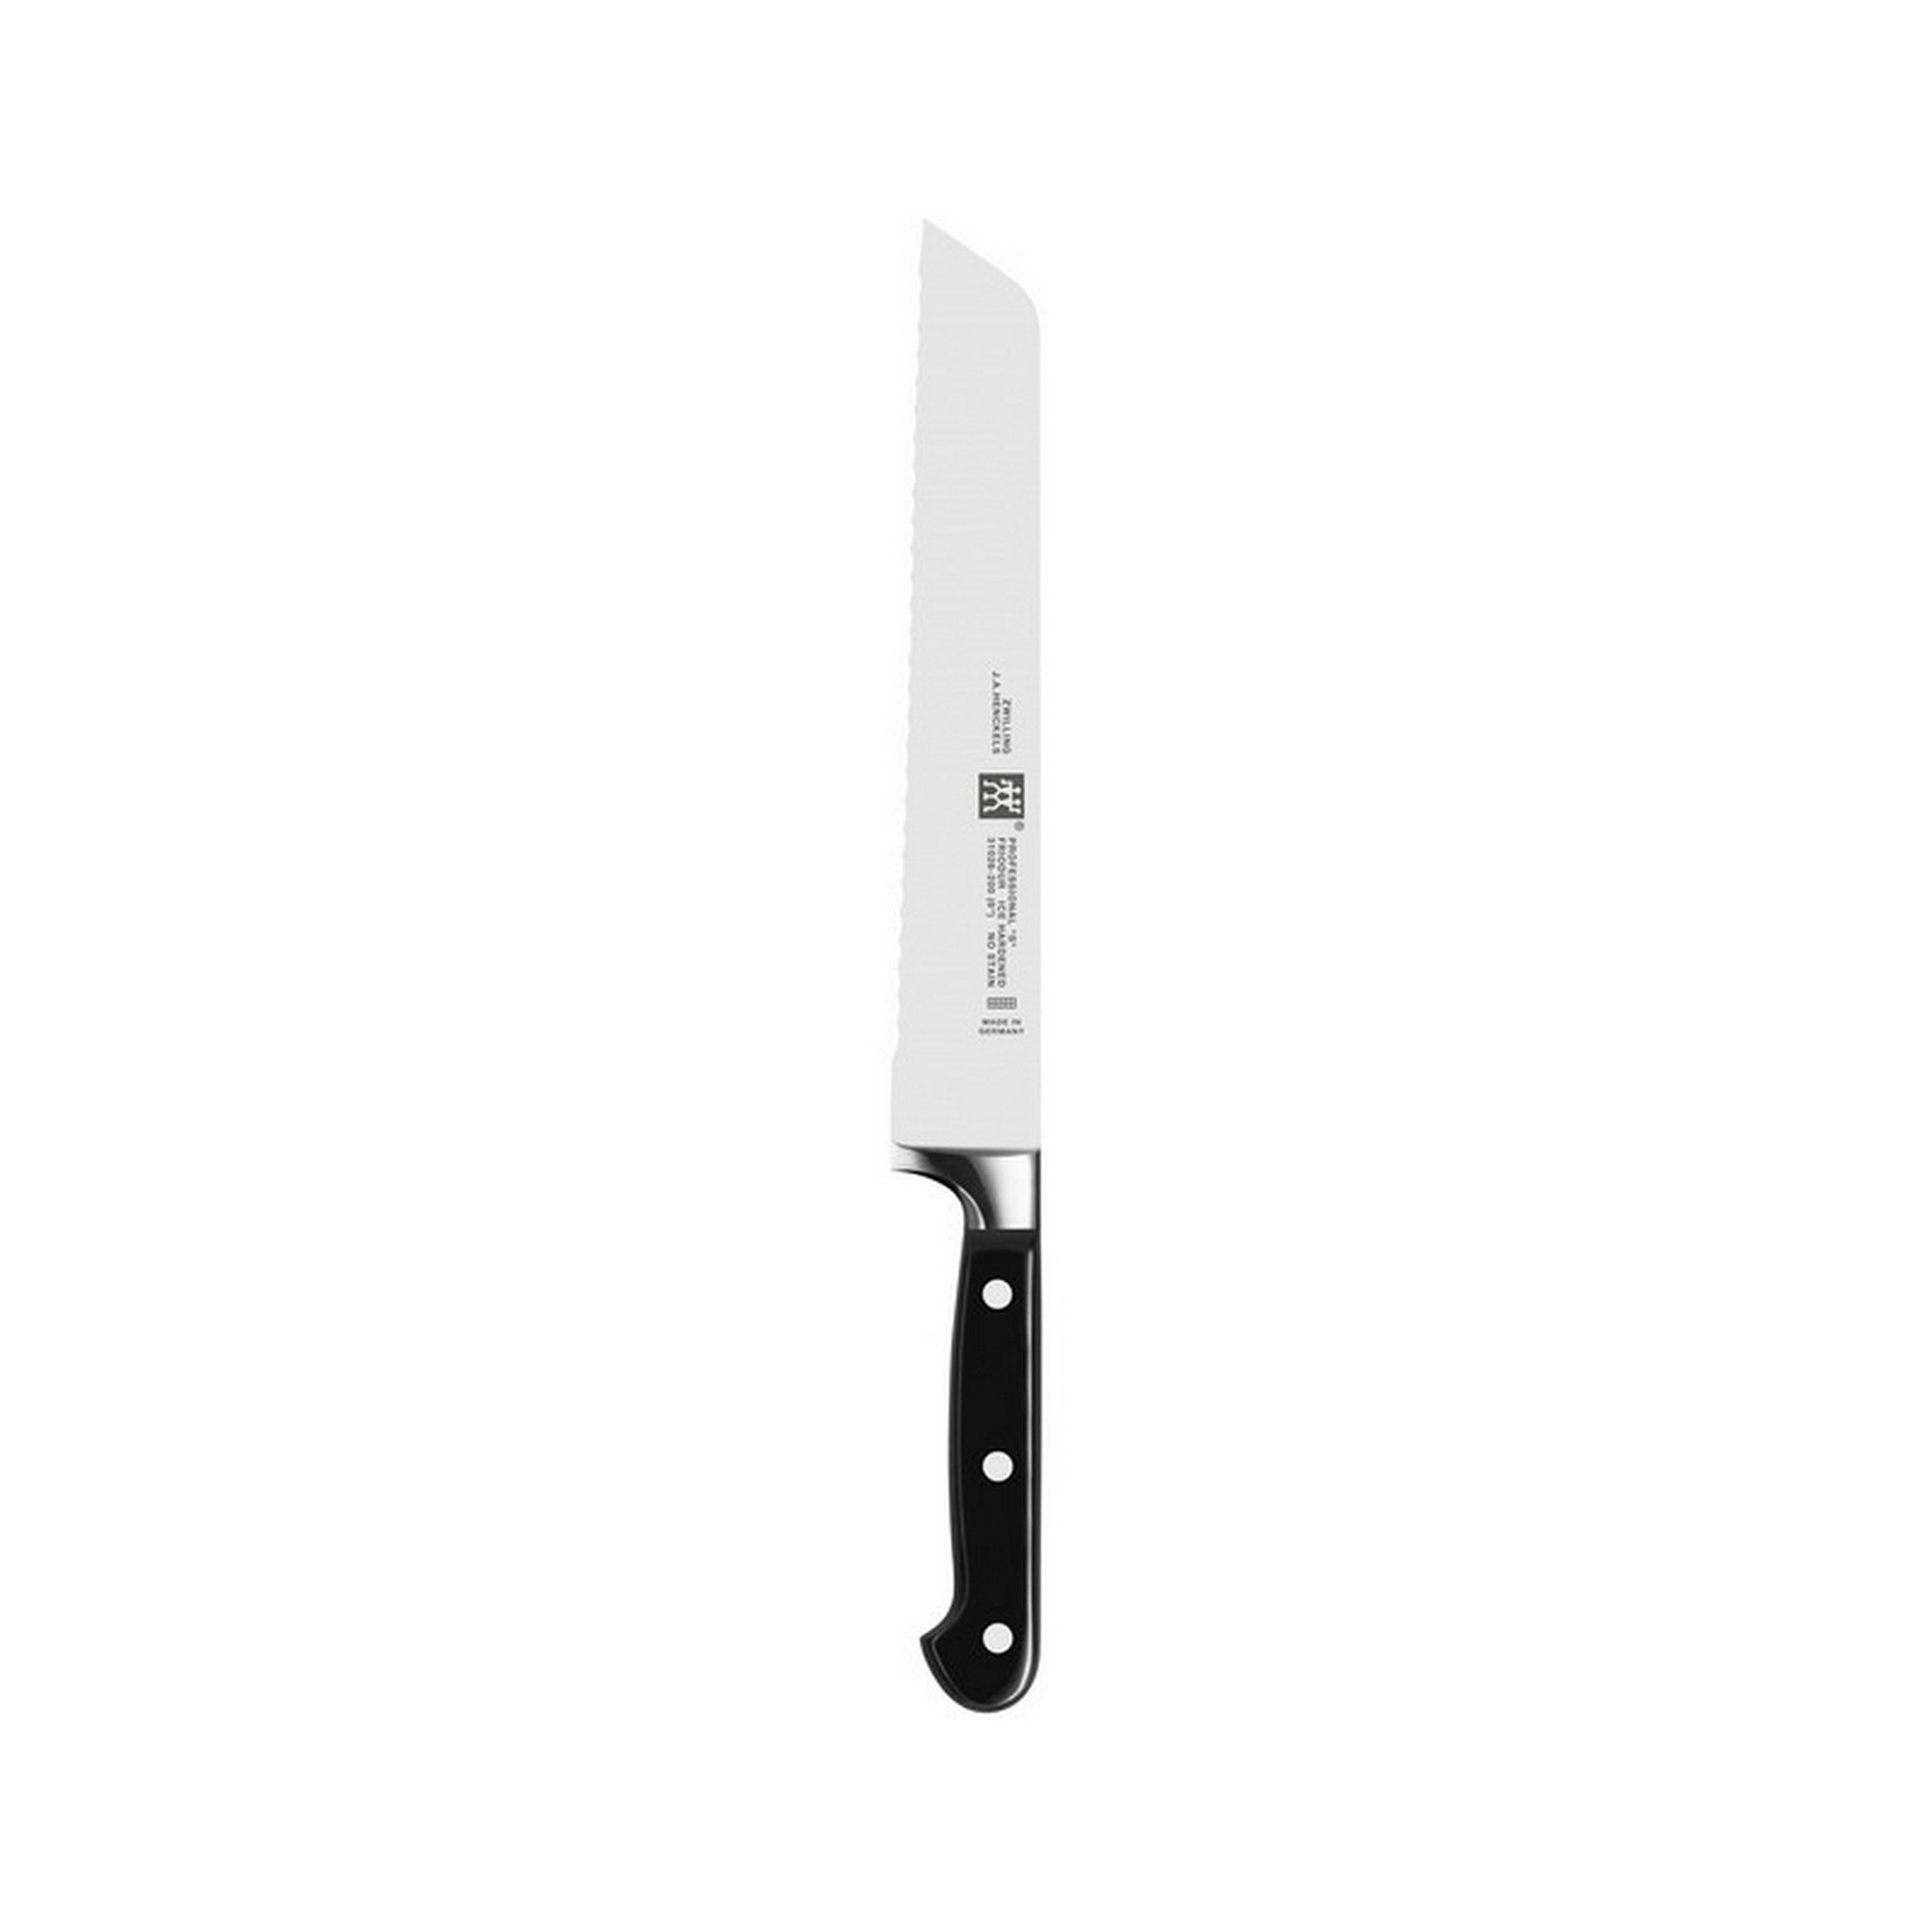 Нож для хлеба Zwilling Professional S, лезвие 20см Zwilling 31026-201, цвет серебристый - фото 1